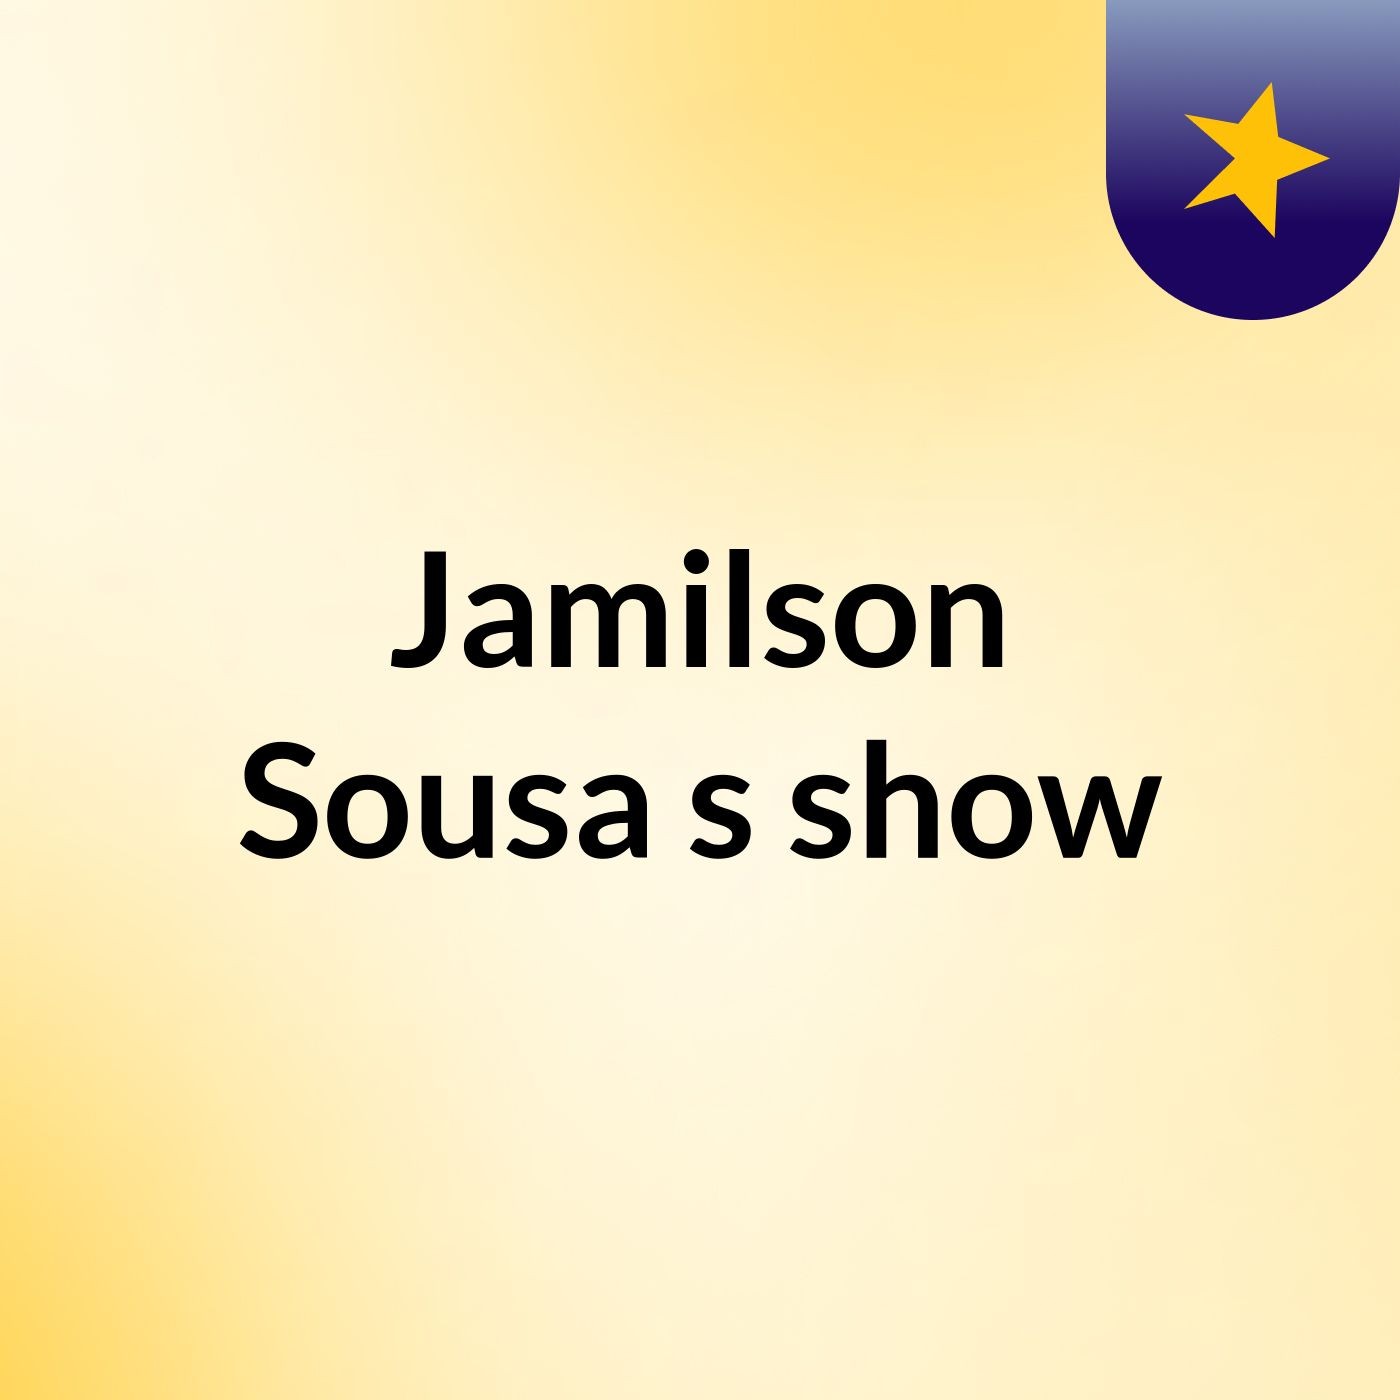 Jamilson Sousa's show